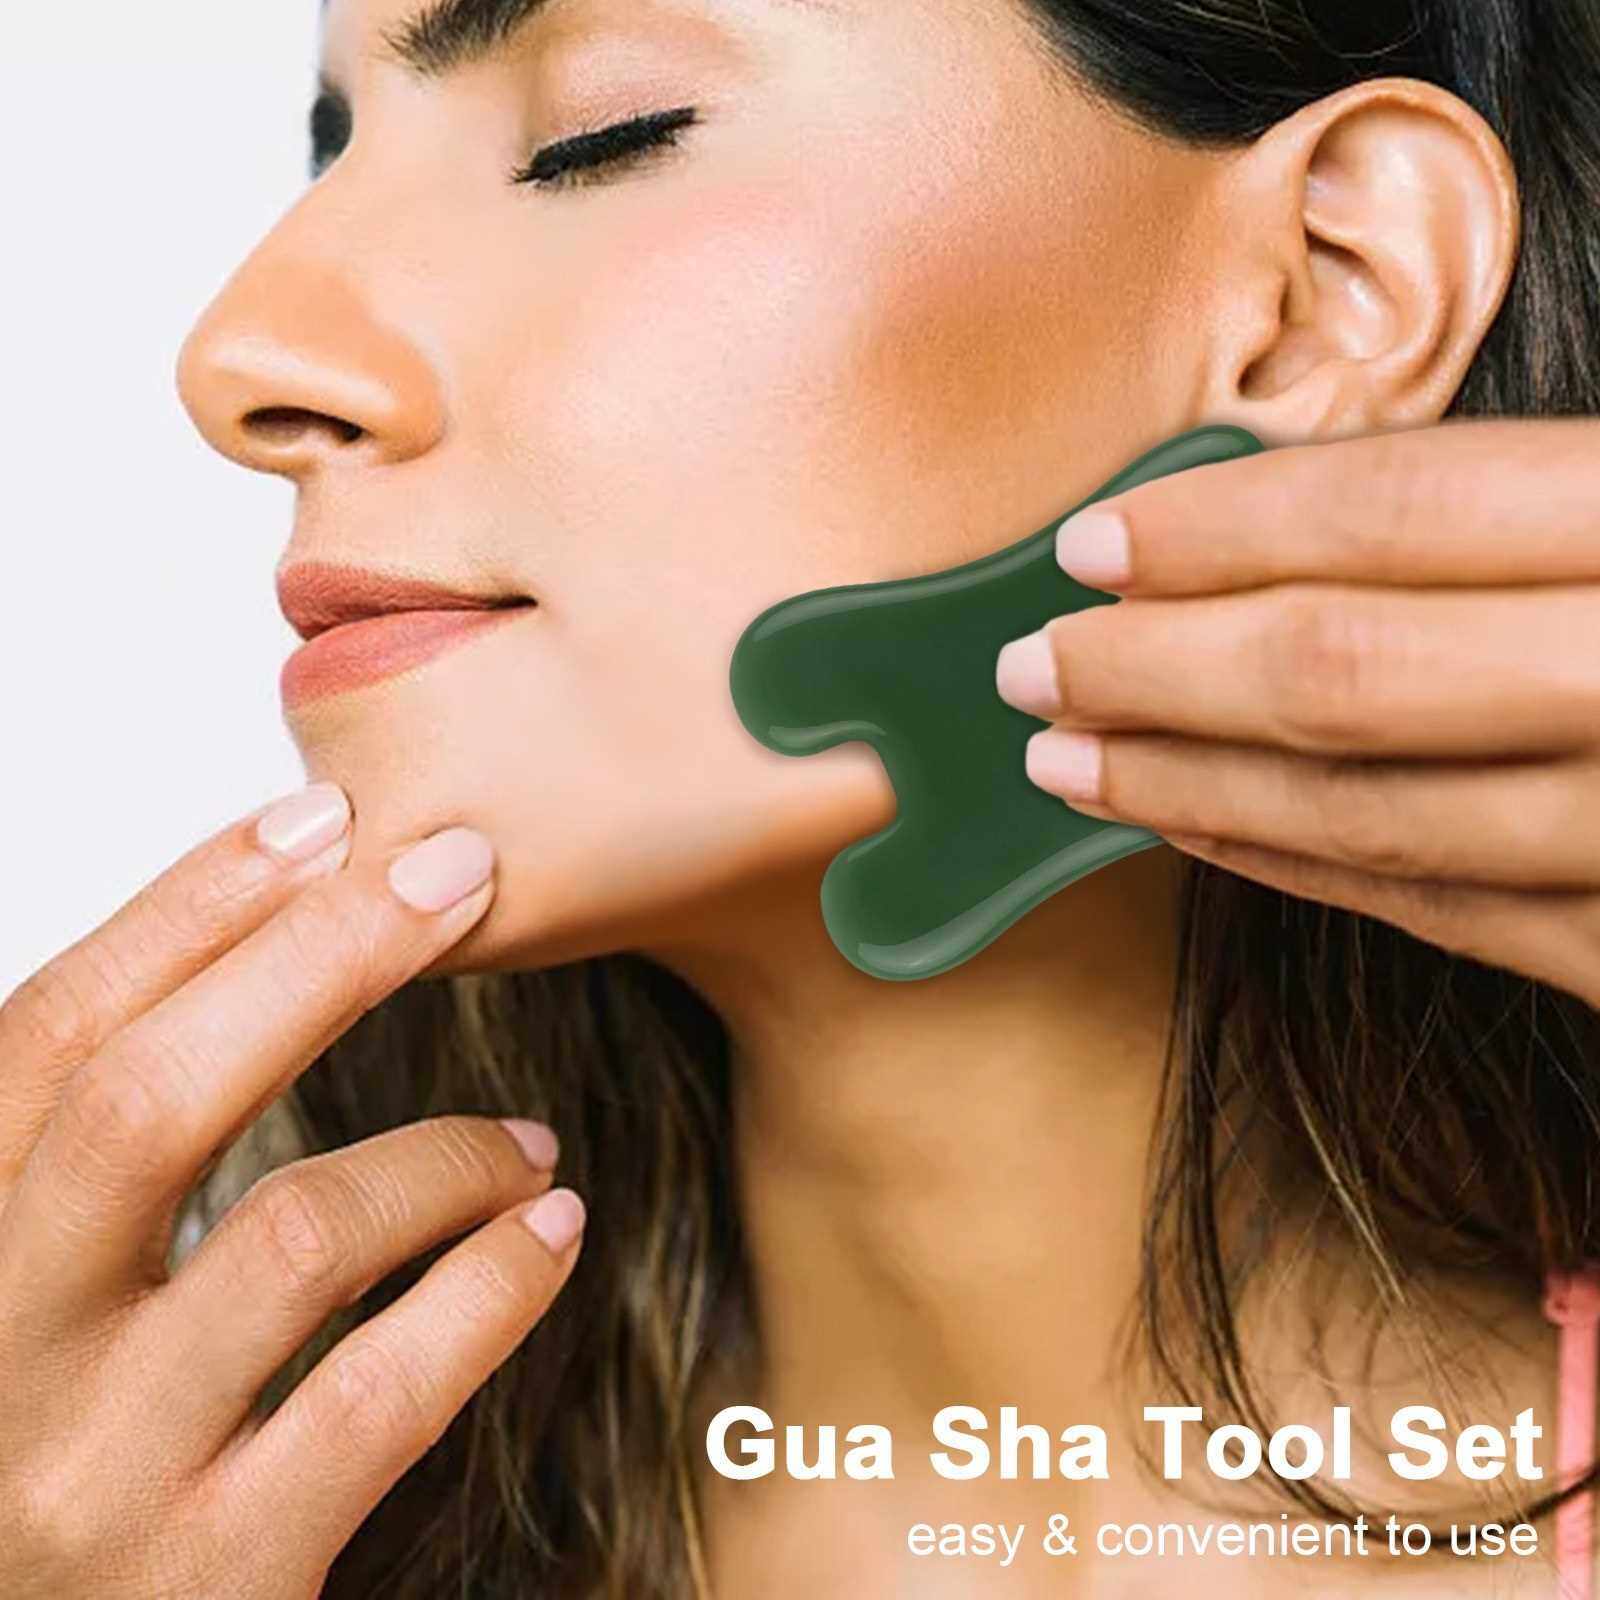 BEST SELLER 2 Pack Gua Sha Board Jade Stone Guasha Scraping Massage Tool Facial Massager for Face Eyes Neck Body Massage Skin Lifting & Tightening (Standard)